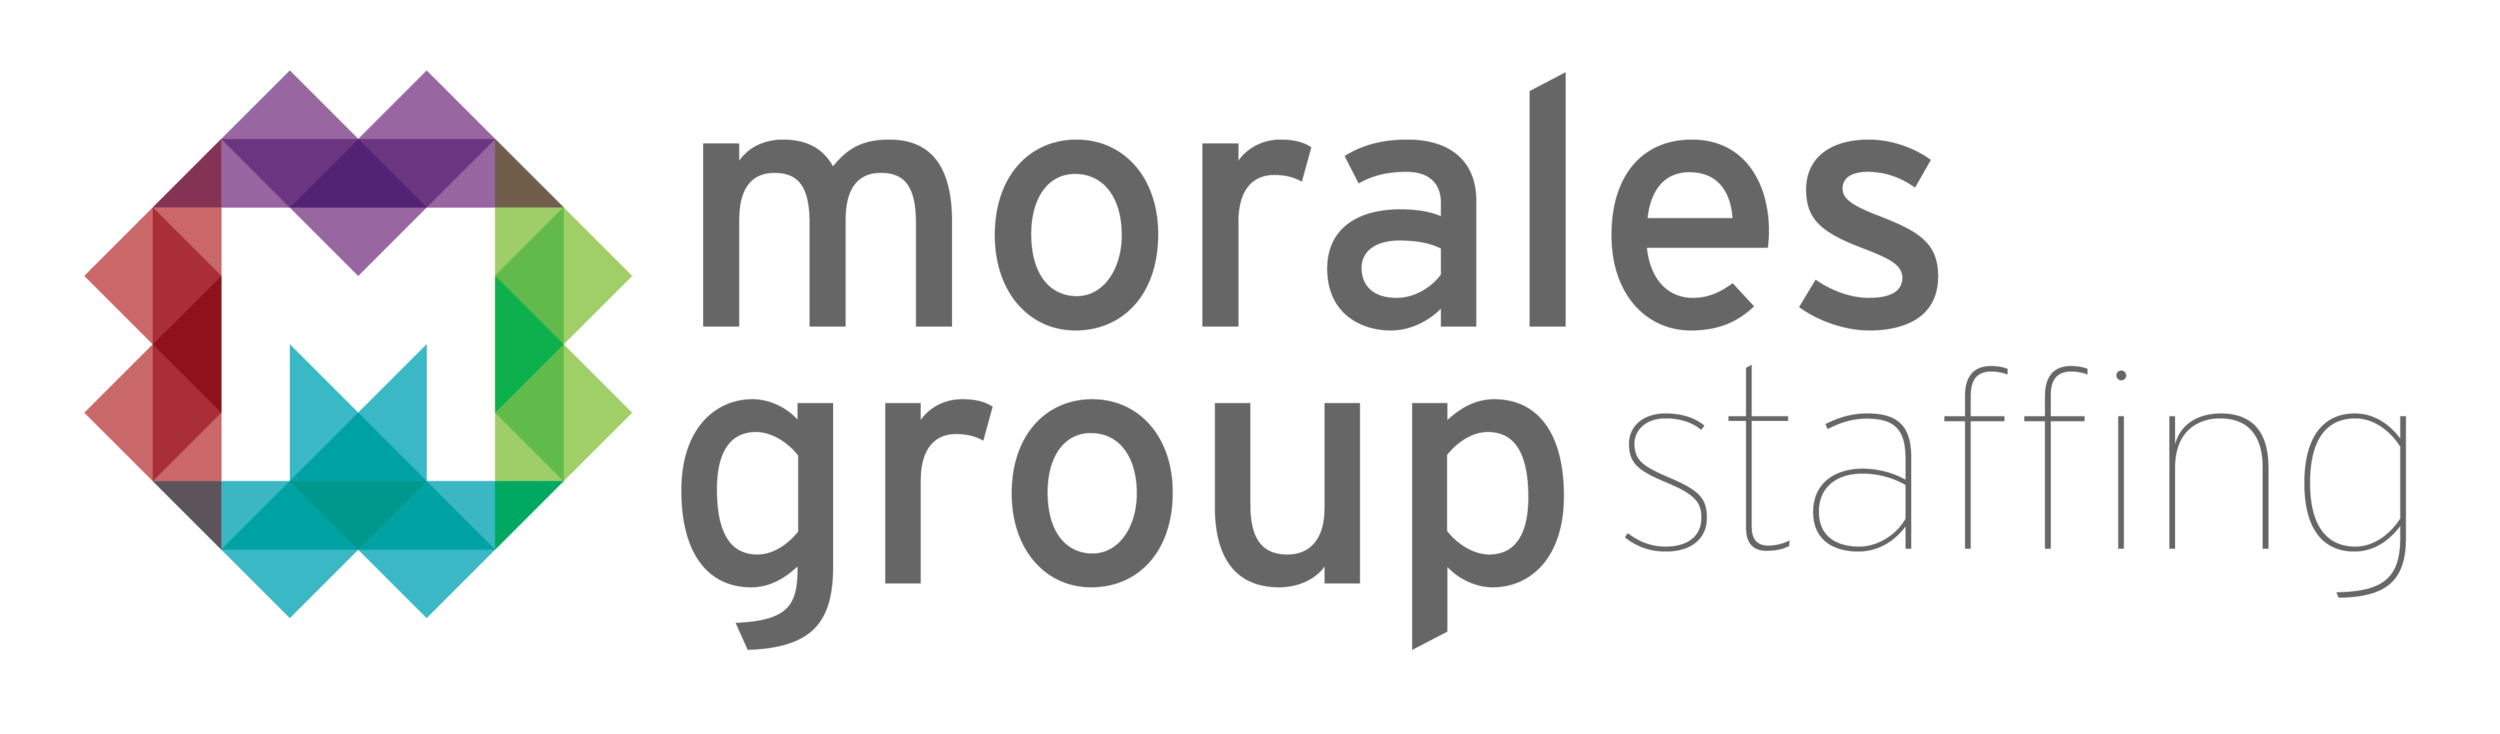 morales_logo2019-01.png